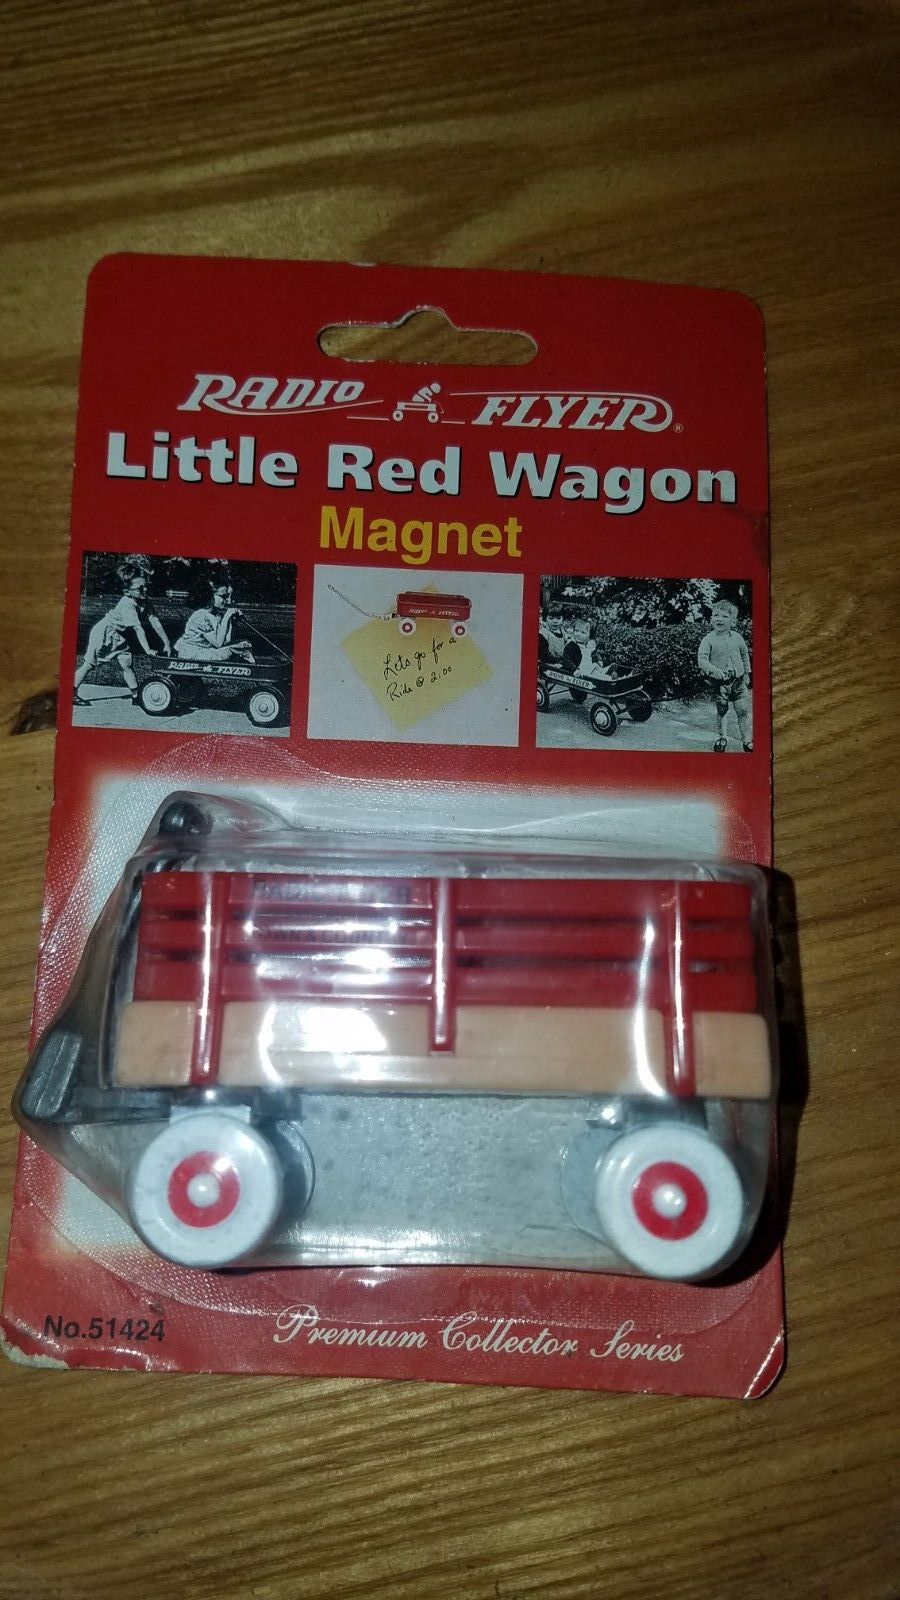 1998 Radio Flyer Little Red Wagon Magnet Premium Collector Series #51424